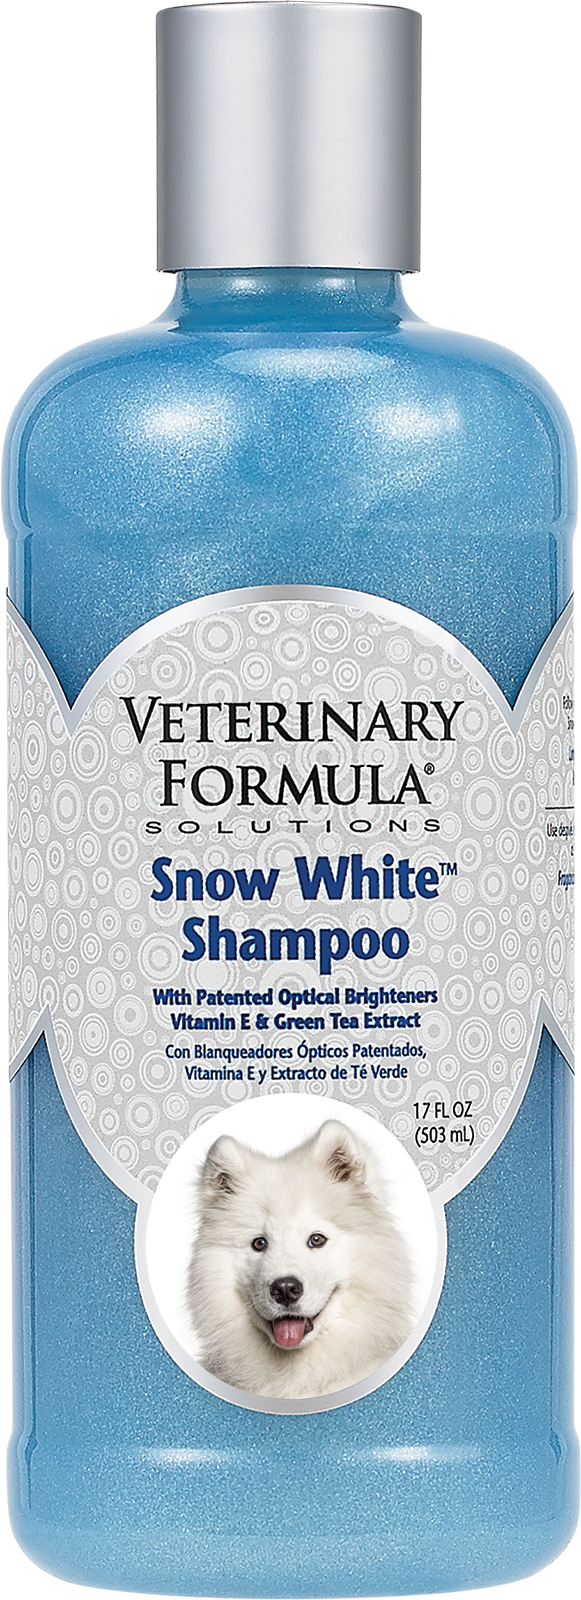 Snow White Shampoo